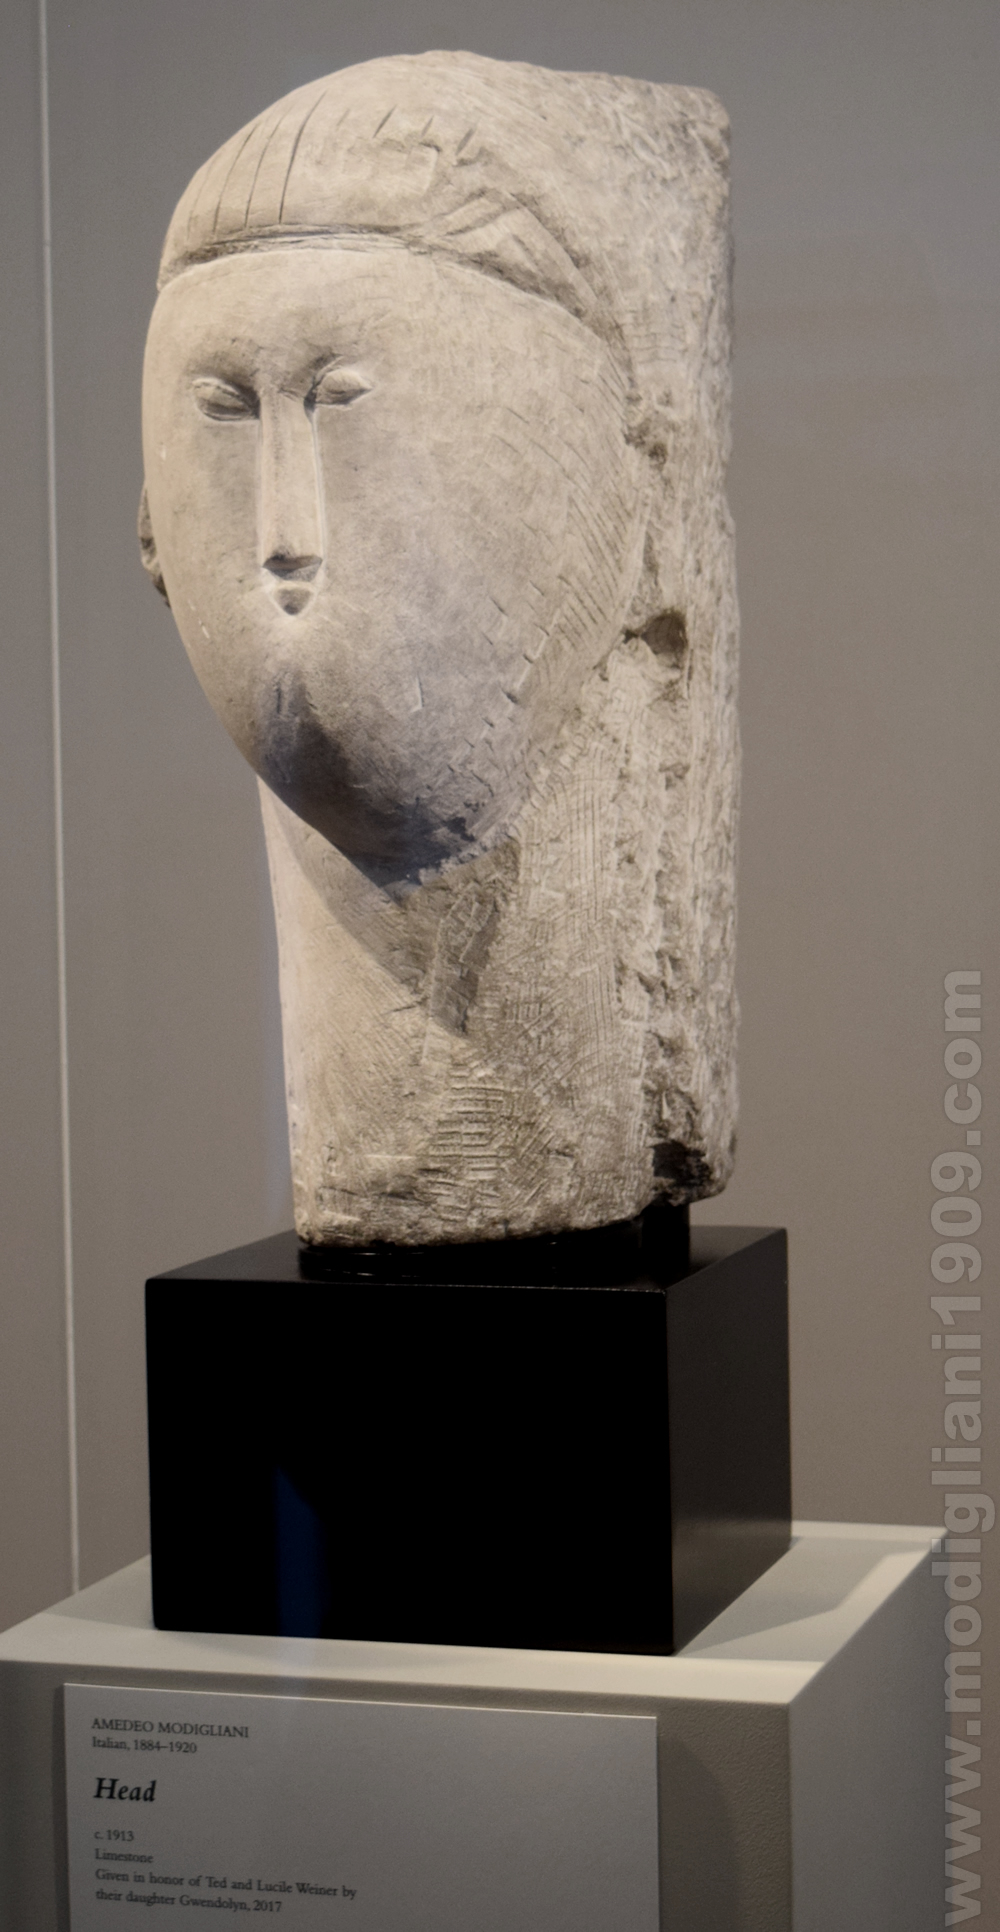 Head (left side), Amedeo Modigliani, 1911 - 1912, Limestone, Kimbell Art Museum